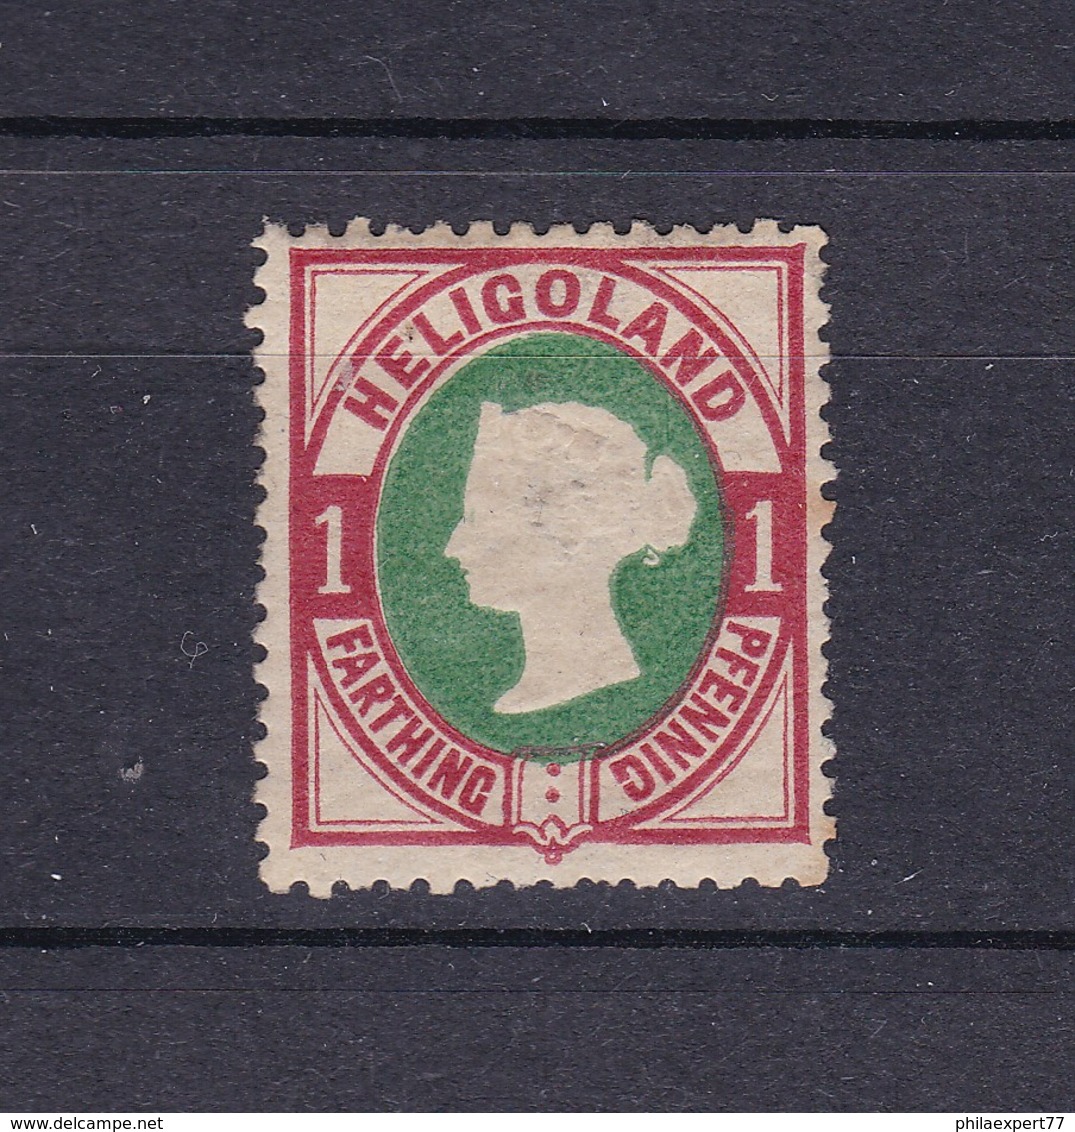 Helgoland - 1875 - Michel Nr. 11 - Heligoland